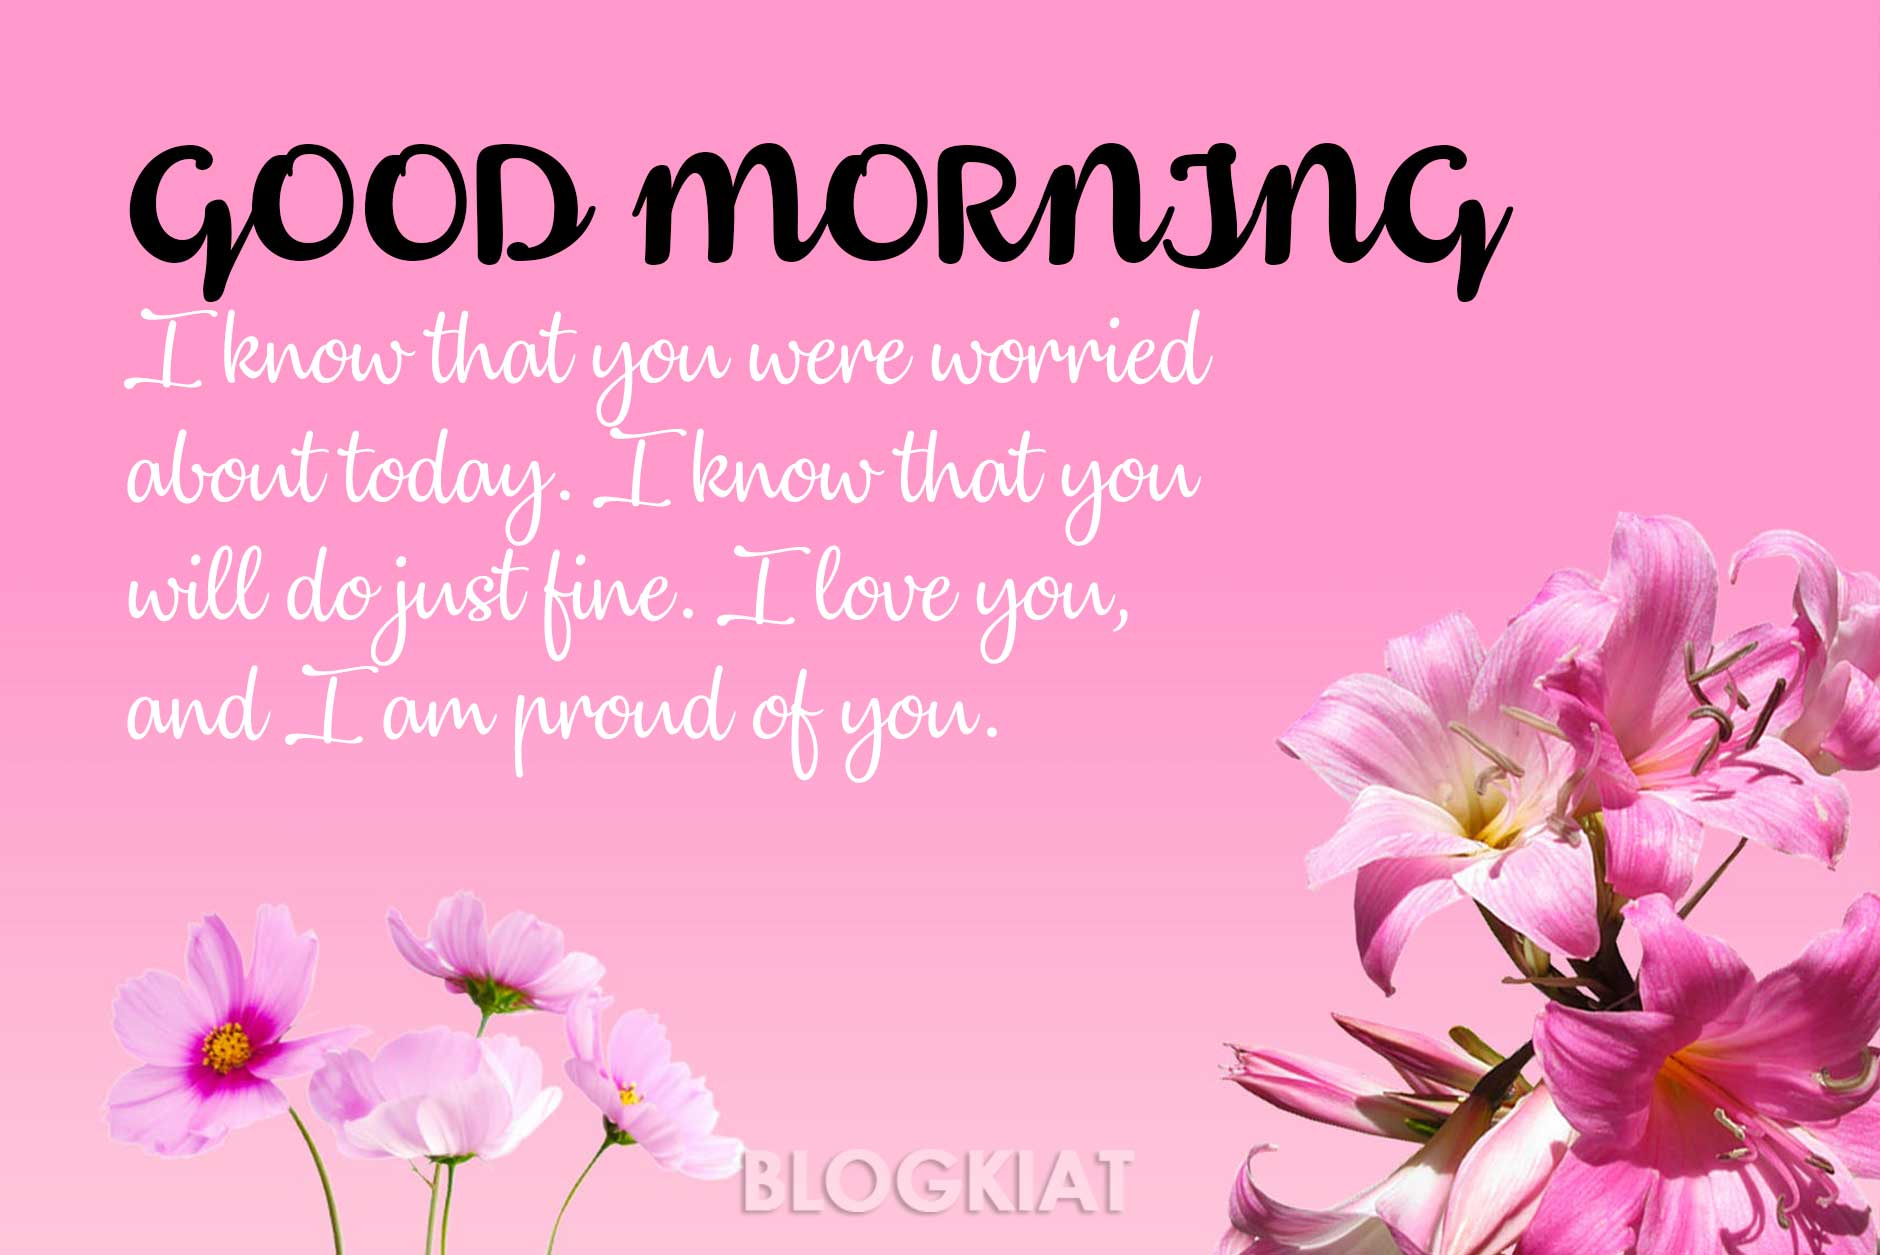 Good Morning Love Messages For Girlfriend - Blogkiat